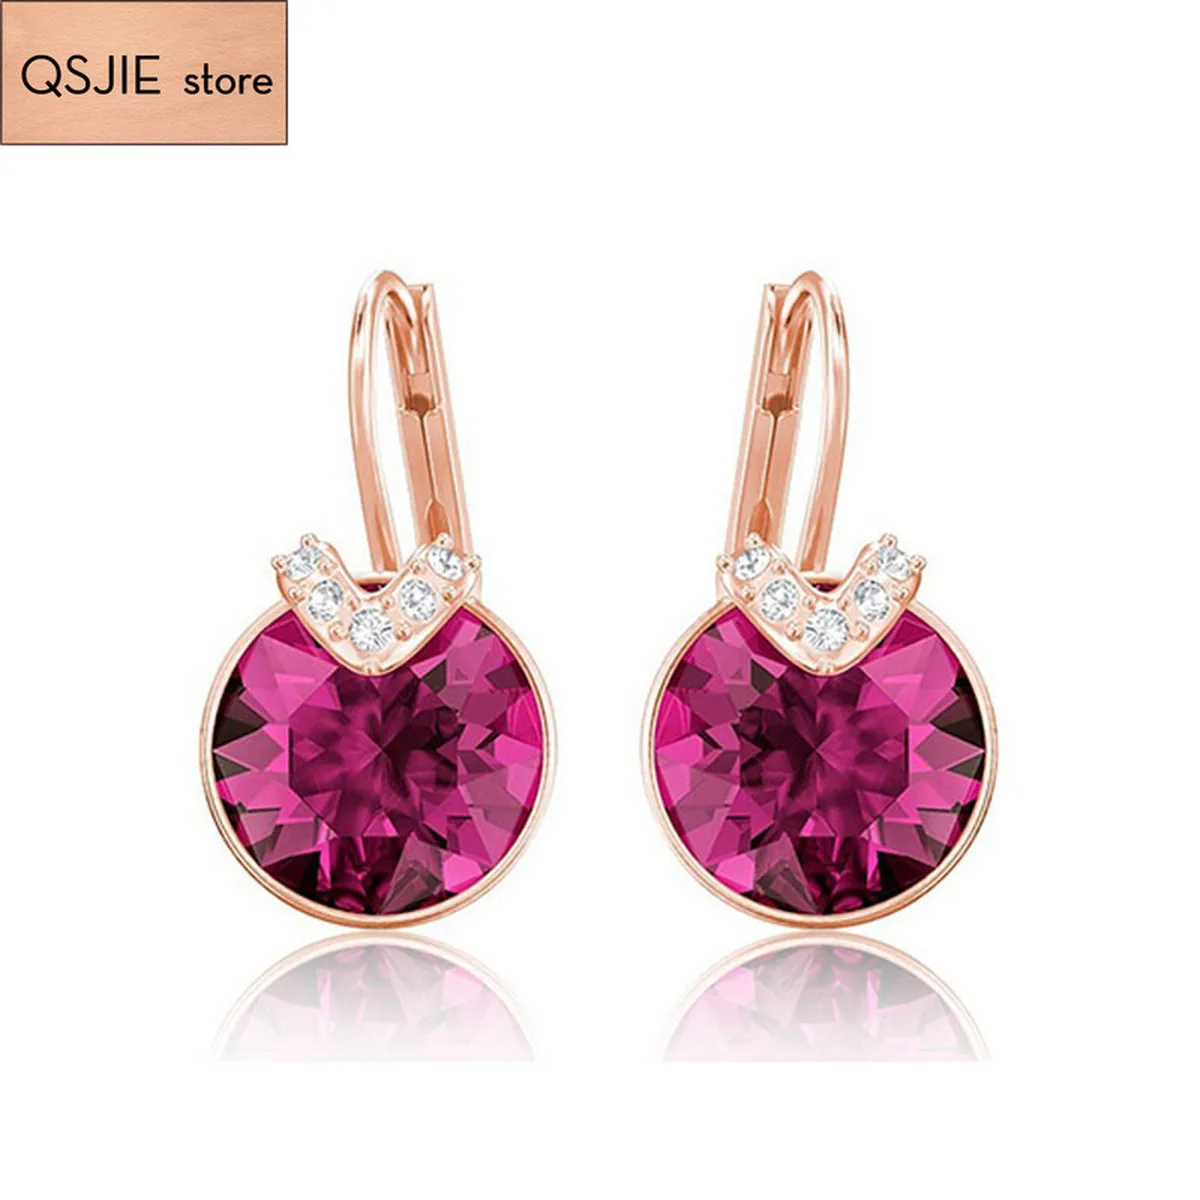 

QSJIE High quality SWA simple Bella crystal new earrings Charming fashion jewelry